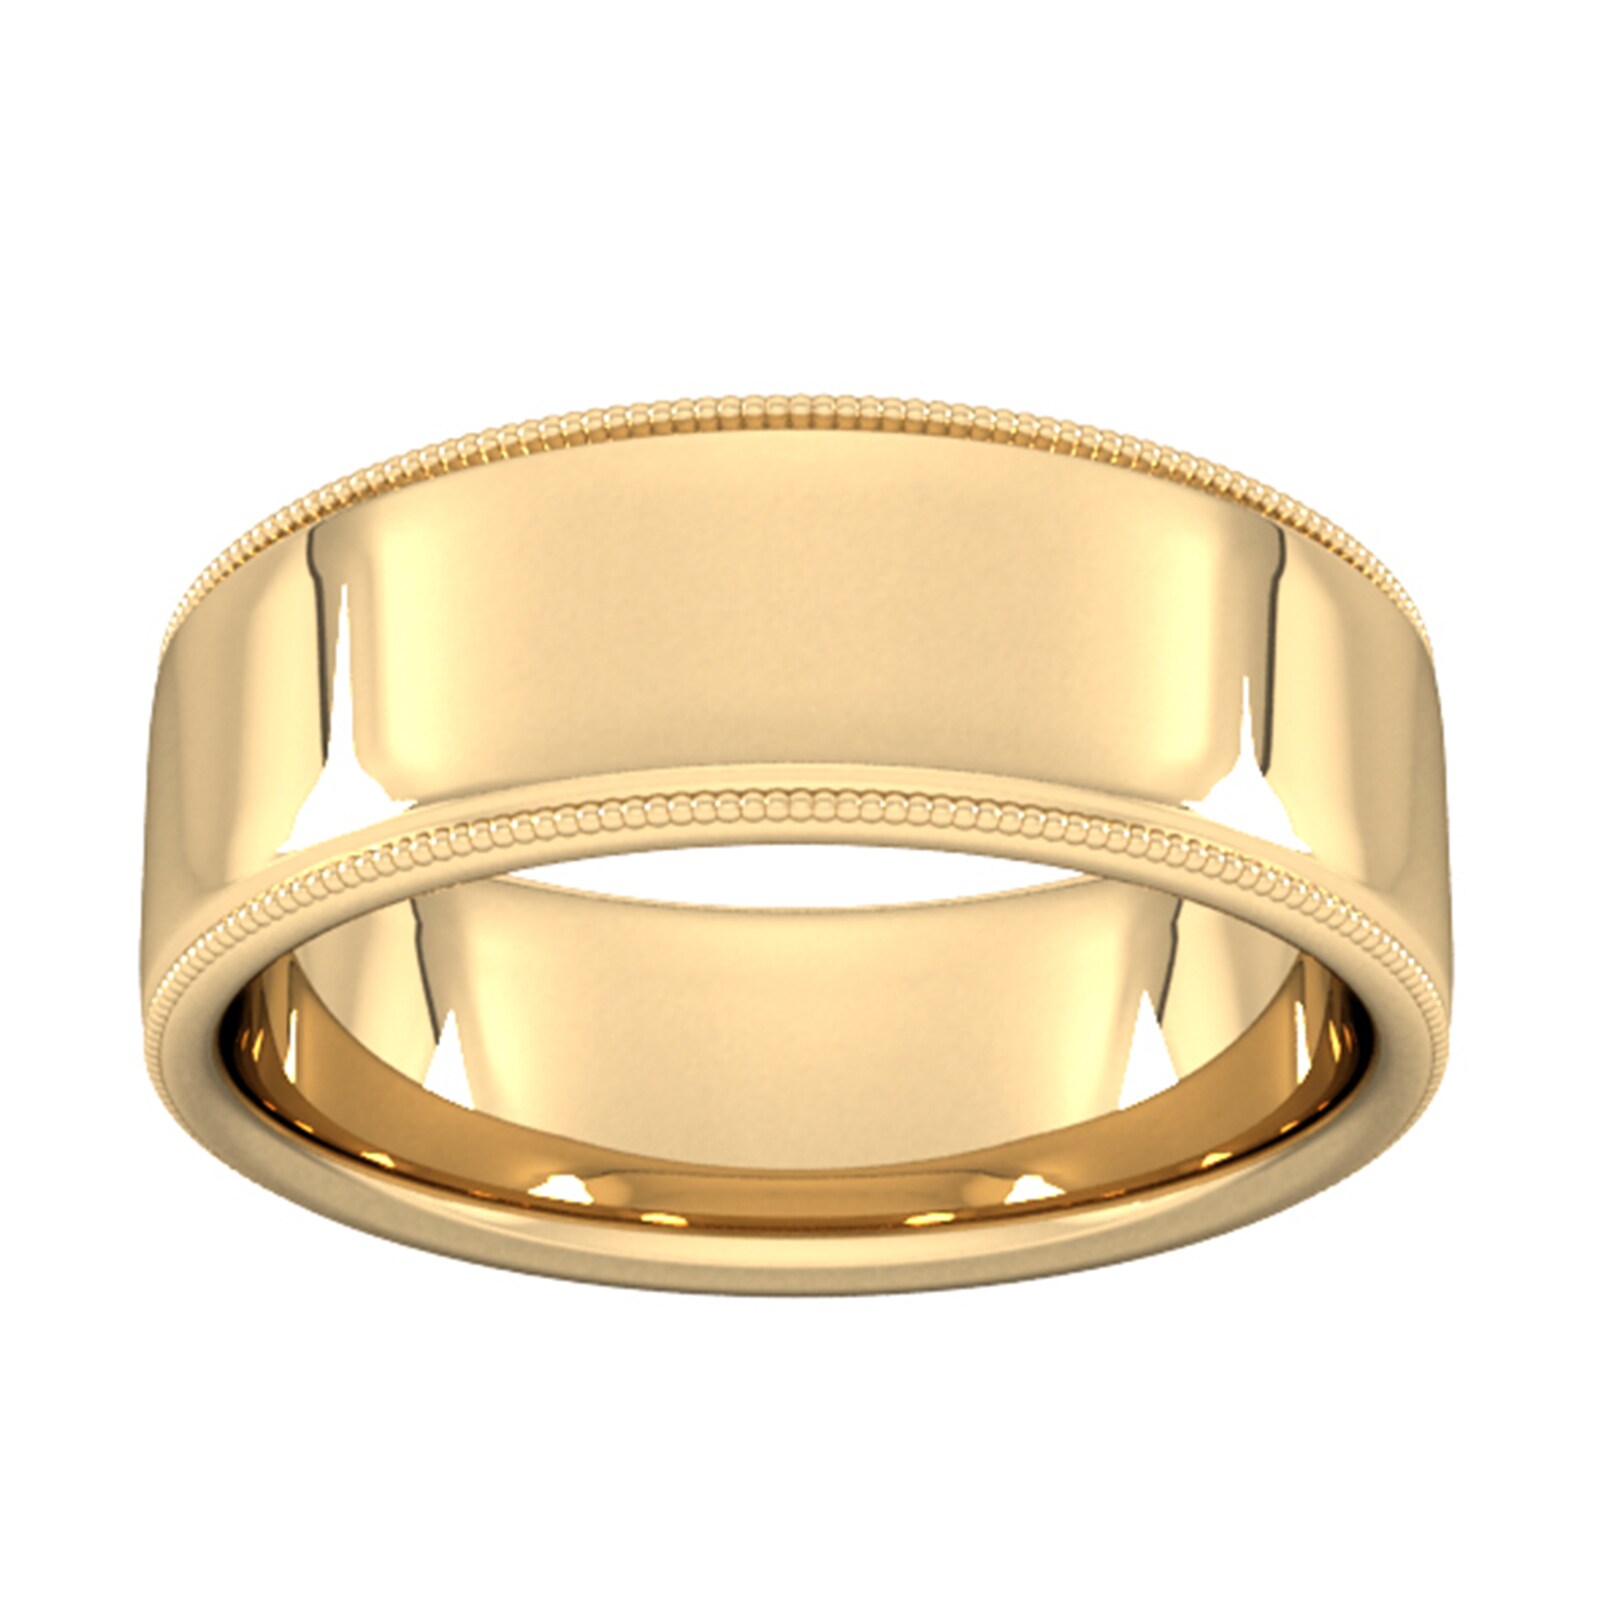 8mm Slight Court Heavy Milgrain Edge Wedding Ring In 18 Carat Yellow Gold - Ring Size T